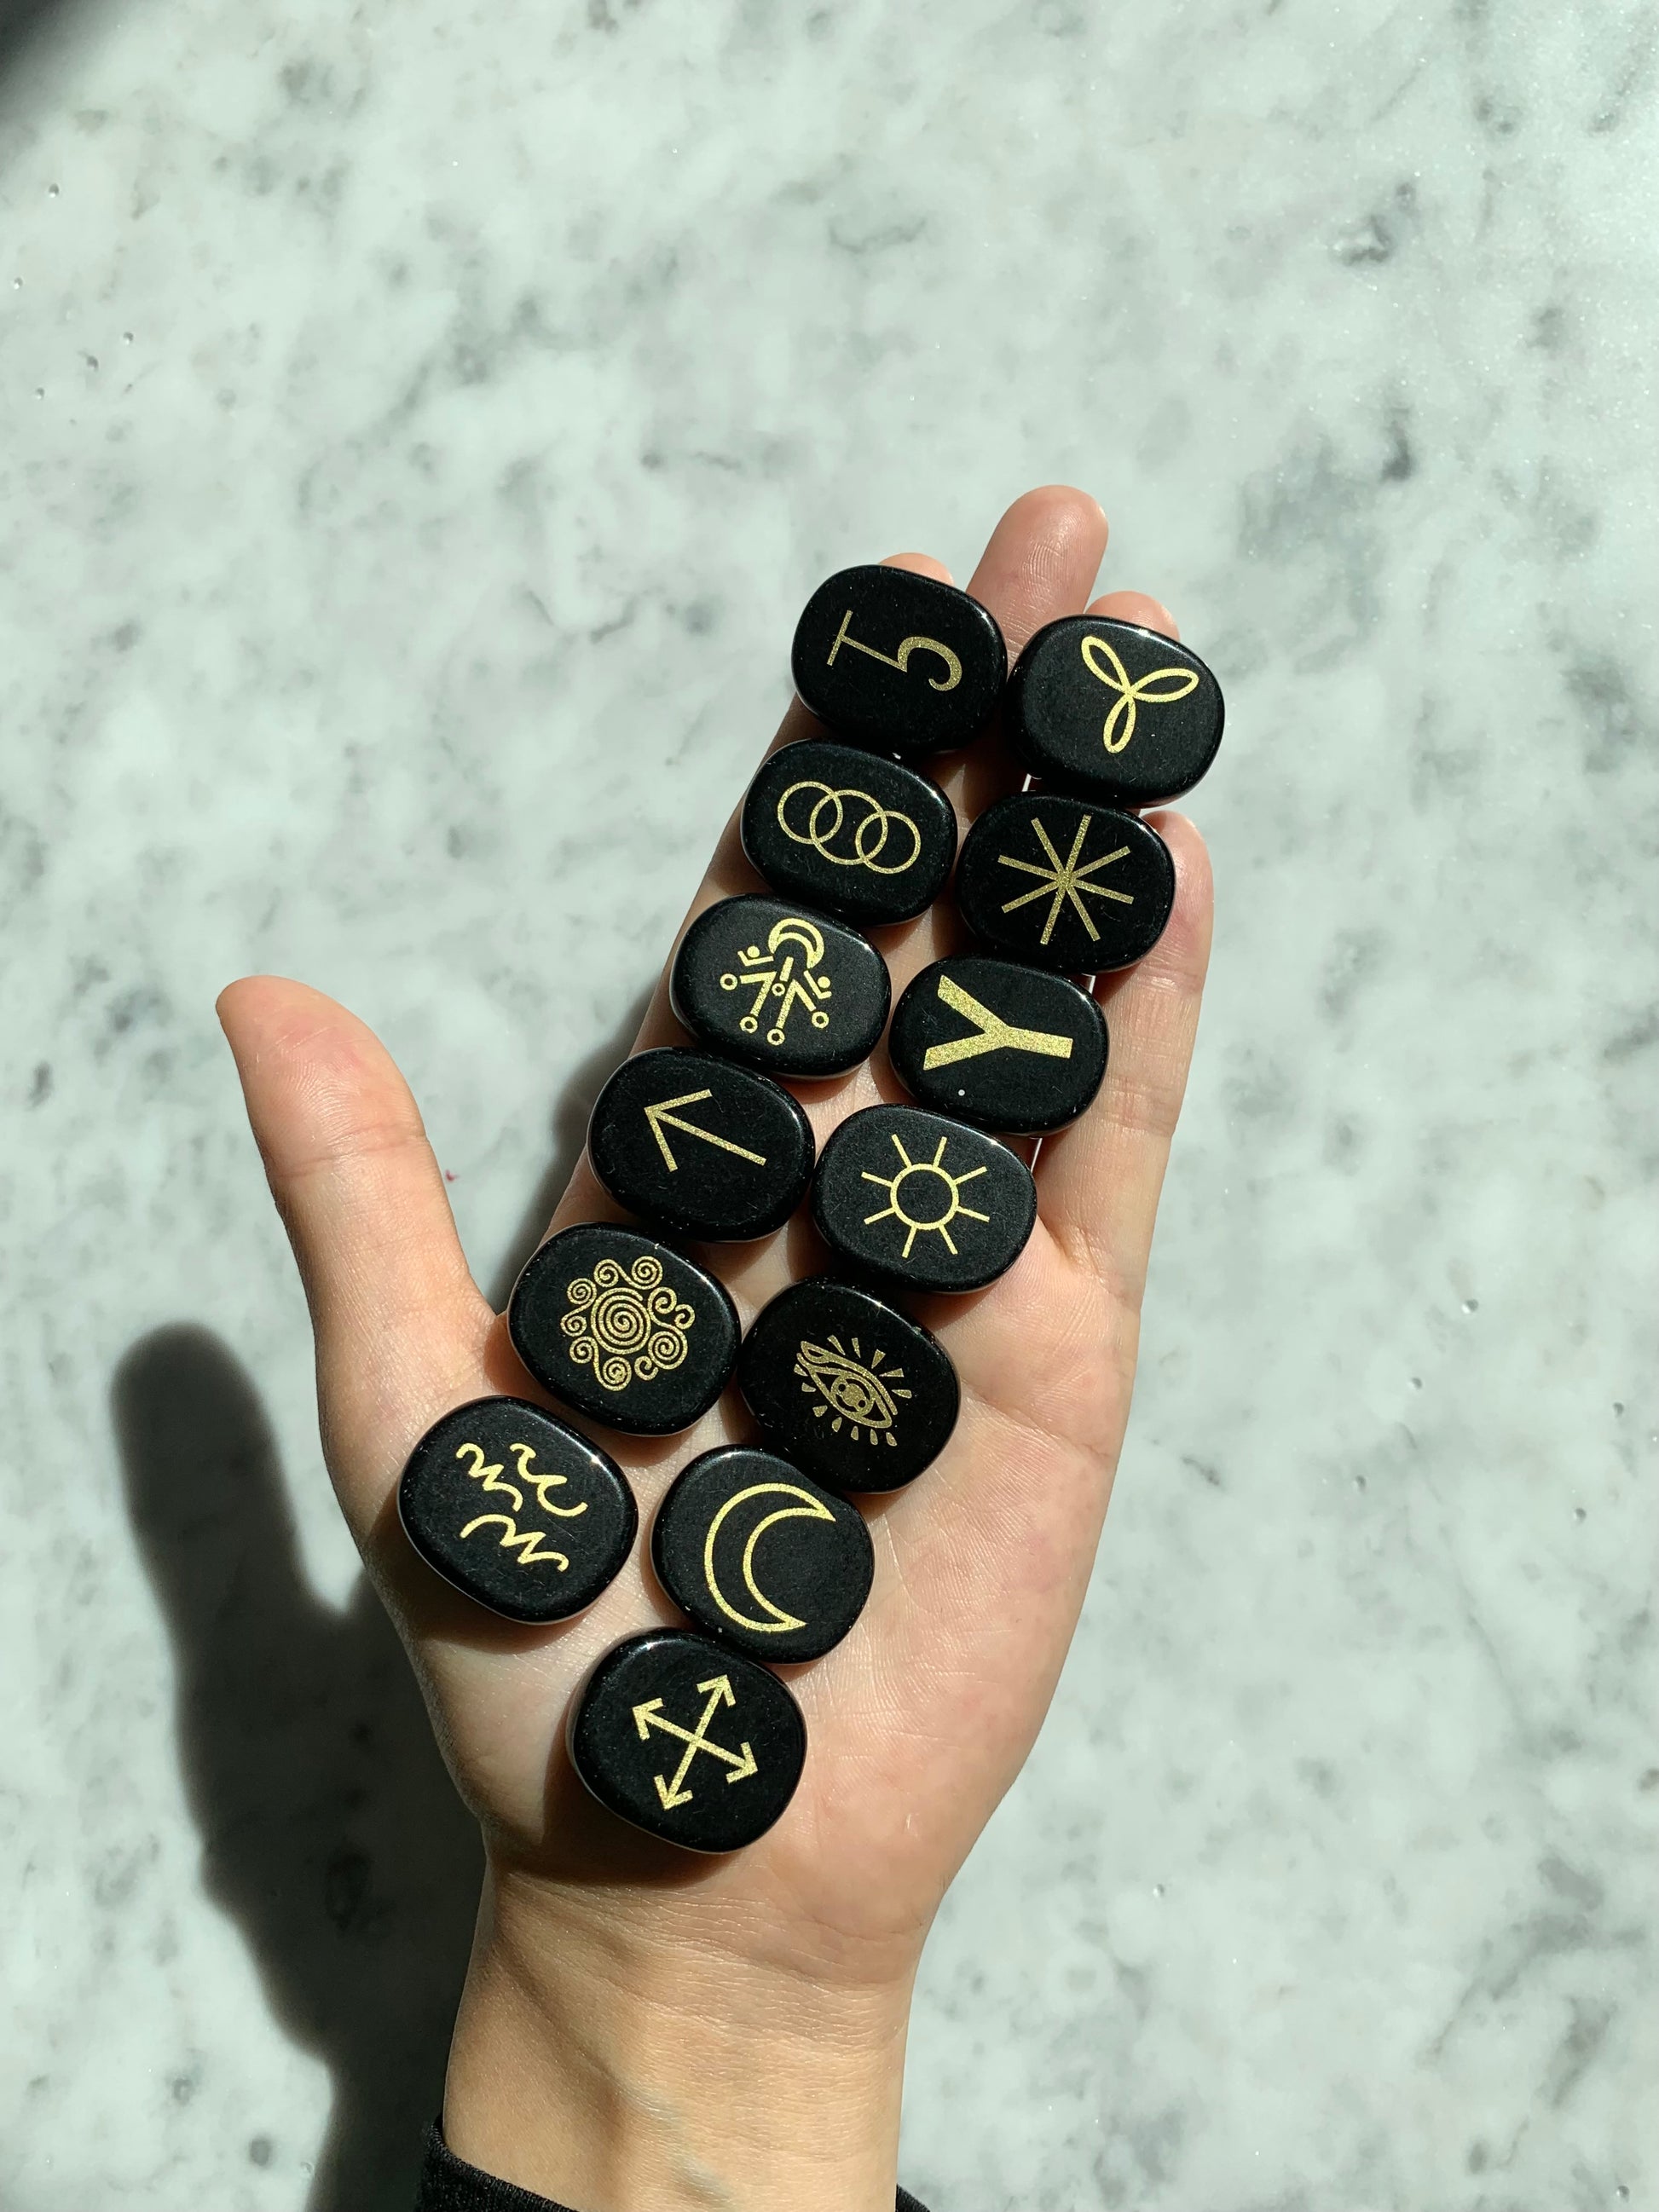 Black Obsidian Rune Stones - Gemstone Runes for Beginners Healing Crystal  Kit Alphabet Stones Divination Tools Elder Futhark Rune Stones Lettering  Set